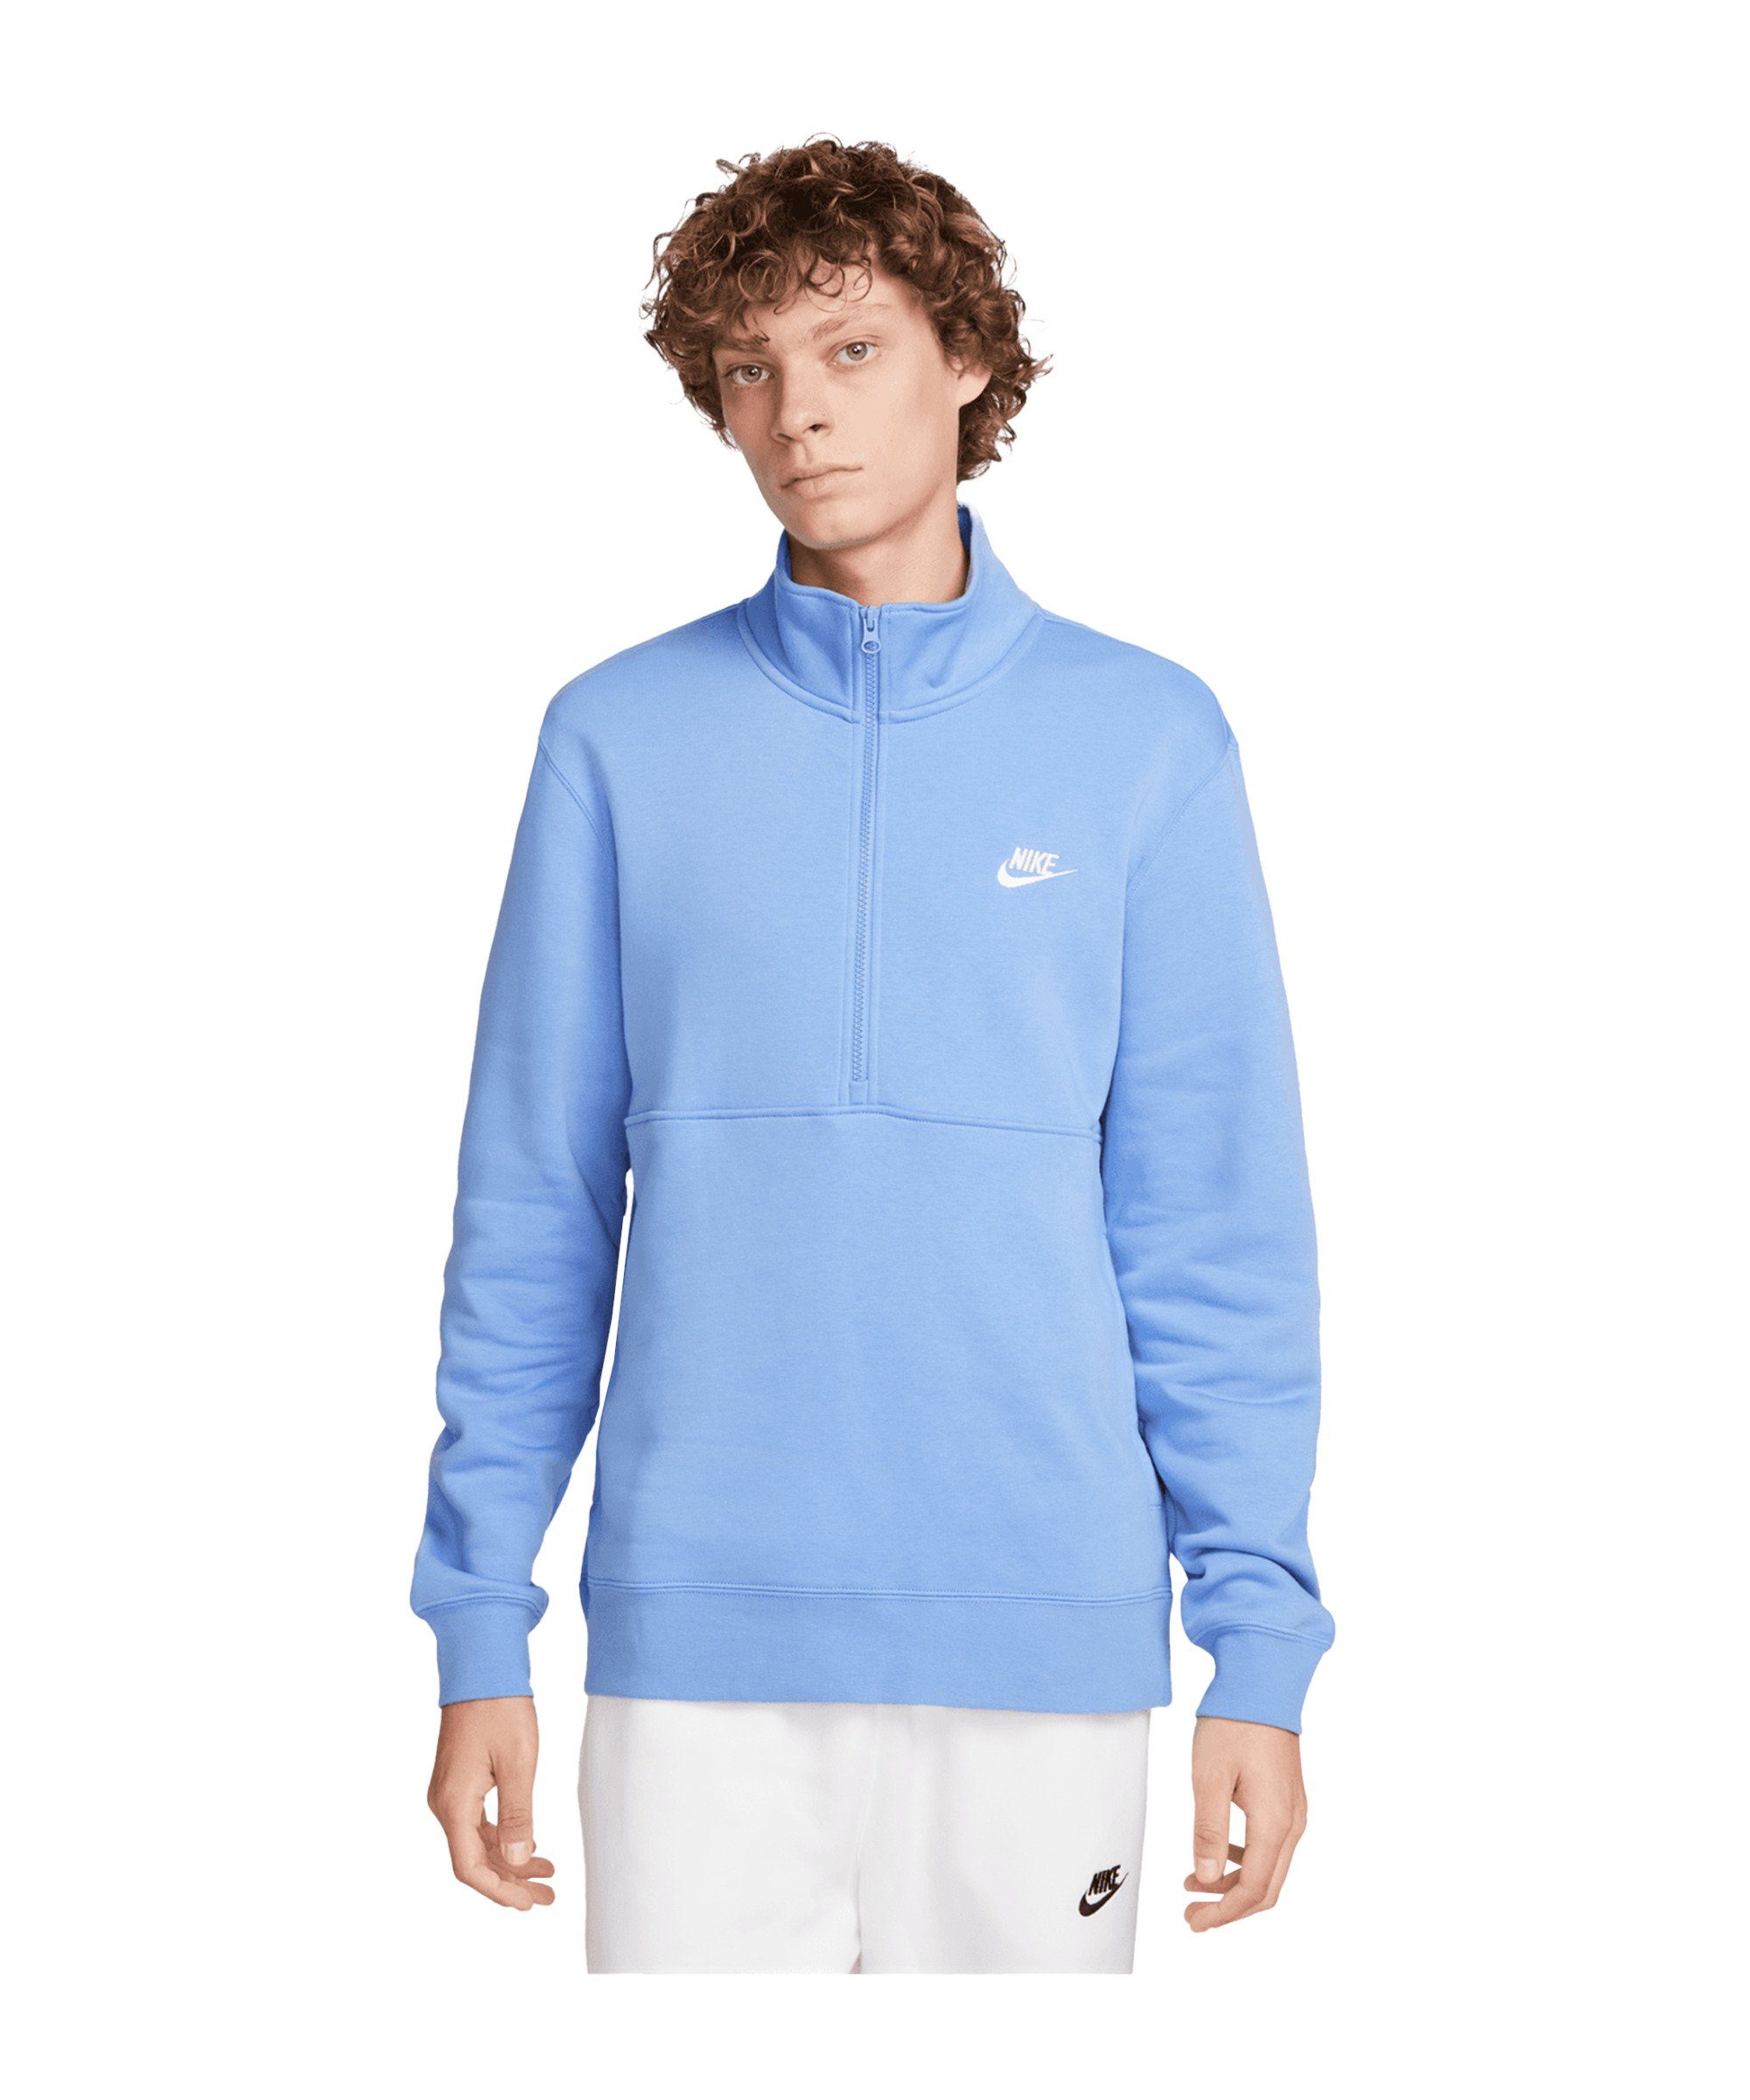 Nike blaublauweiss HalfZip Club Sweatshirt Sportswear Sweatshirt